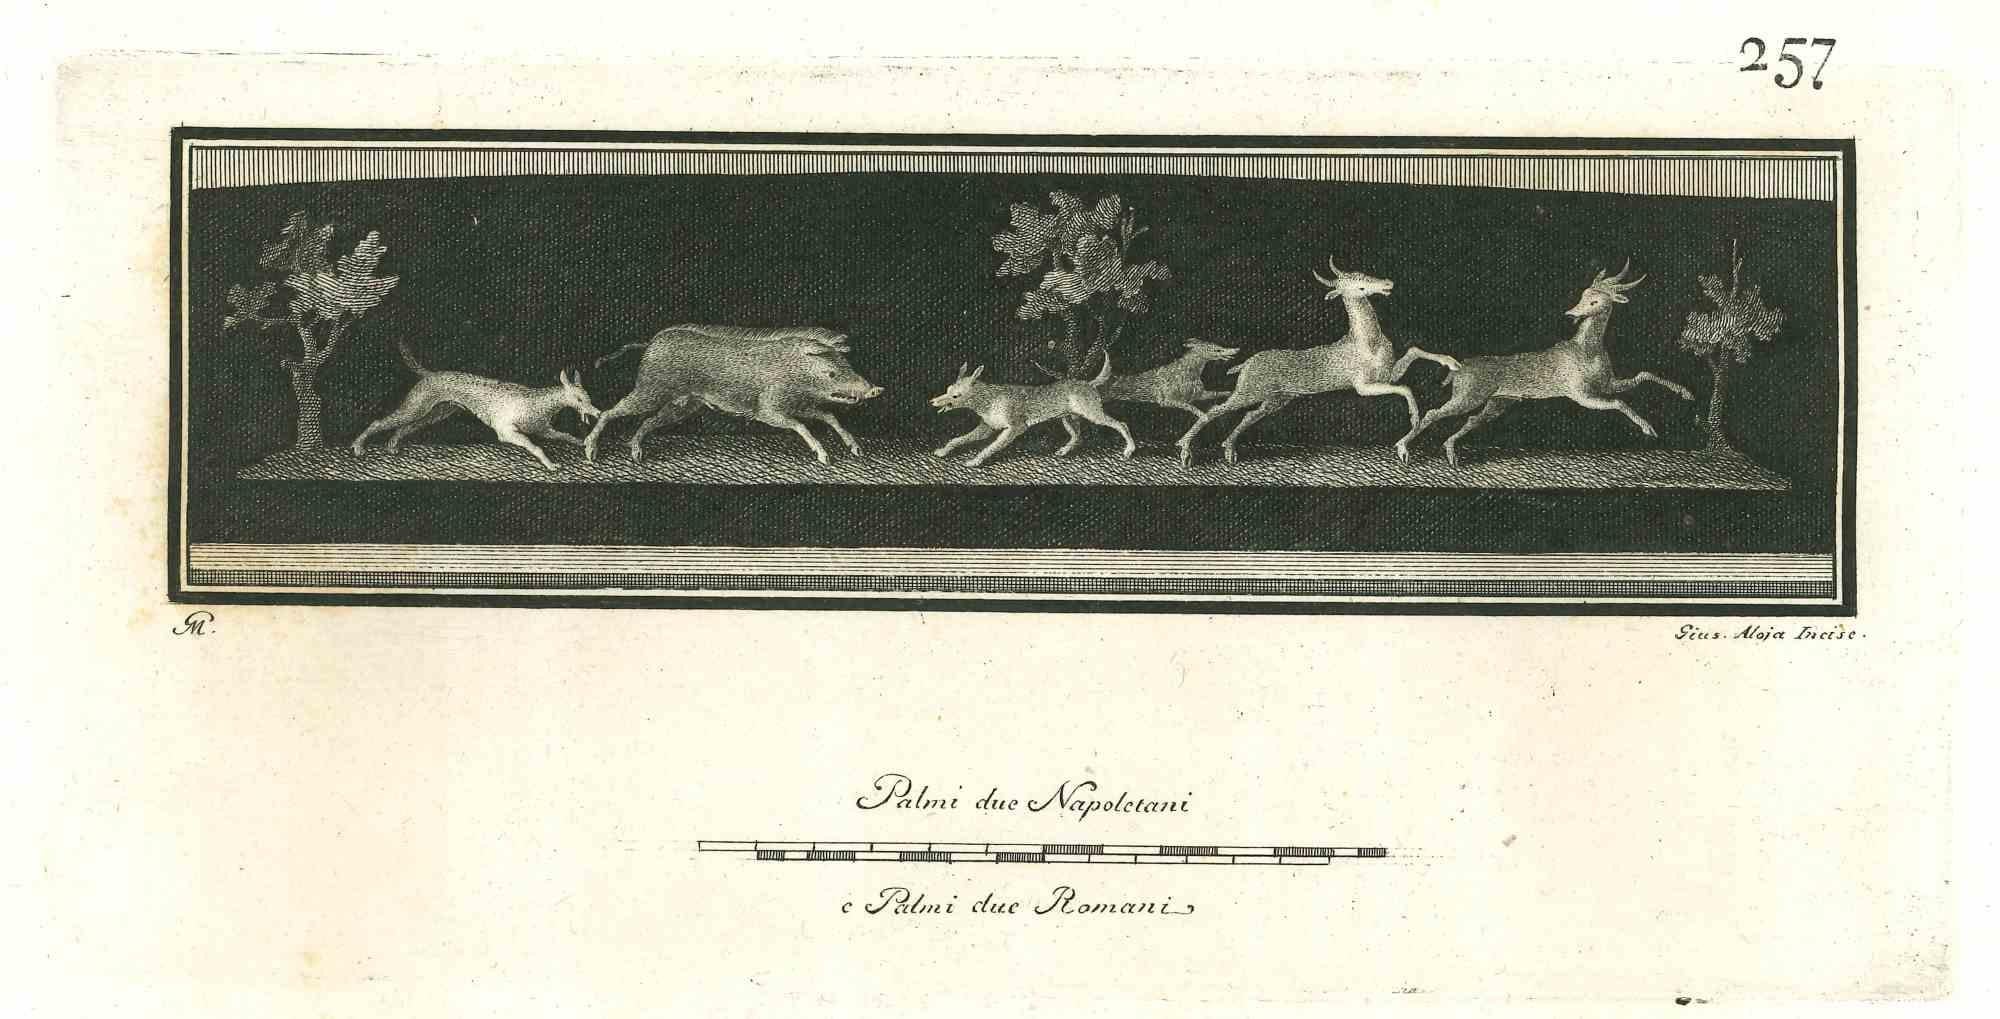 Vincenzo Aloja Figurative Print - Ancient Roman Fresco of Animals - Original Etching by V. Aloja - 18th Century